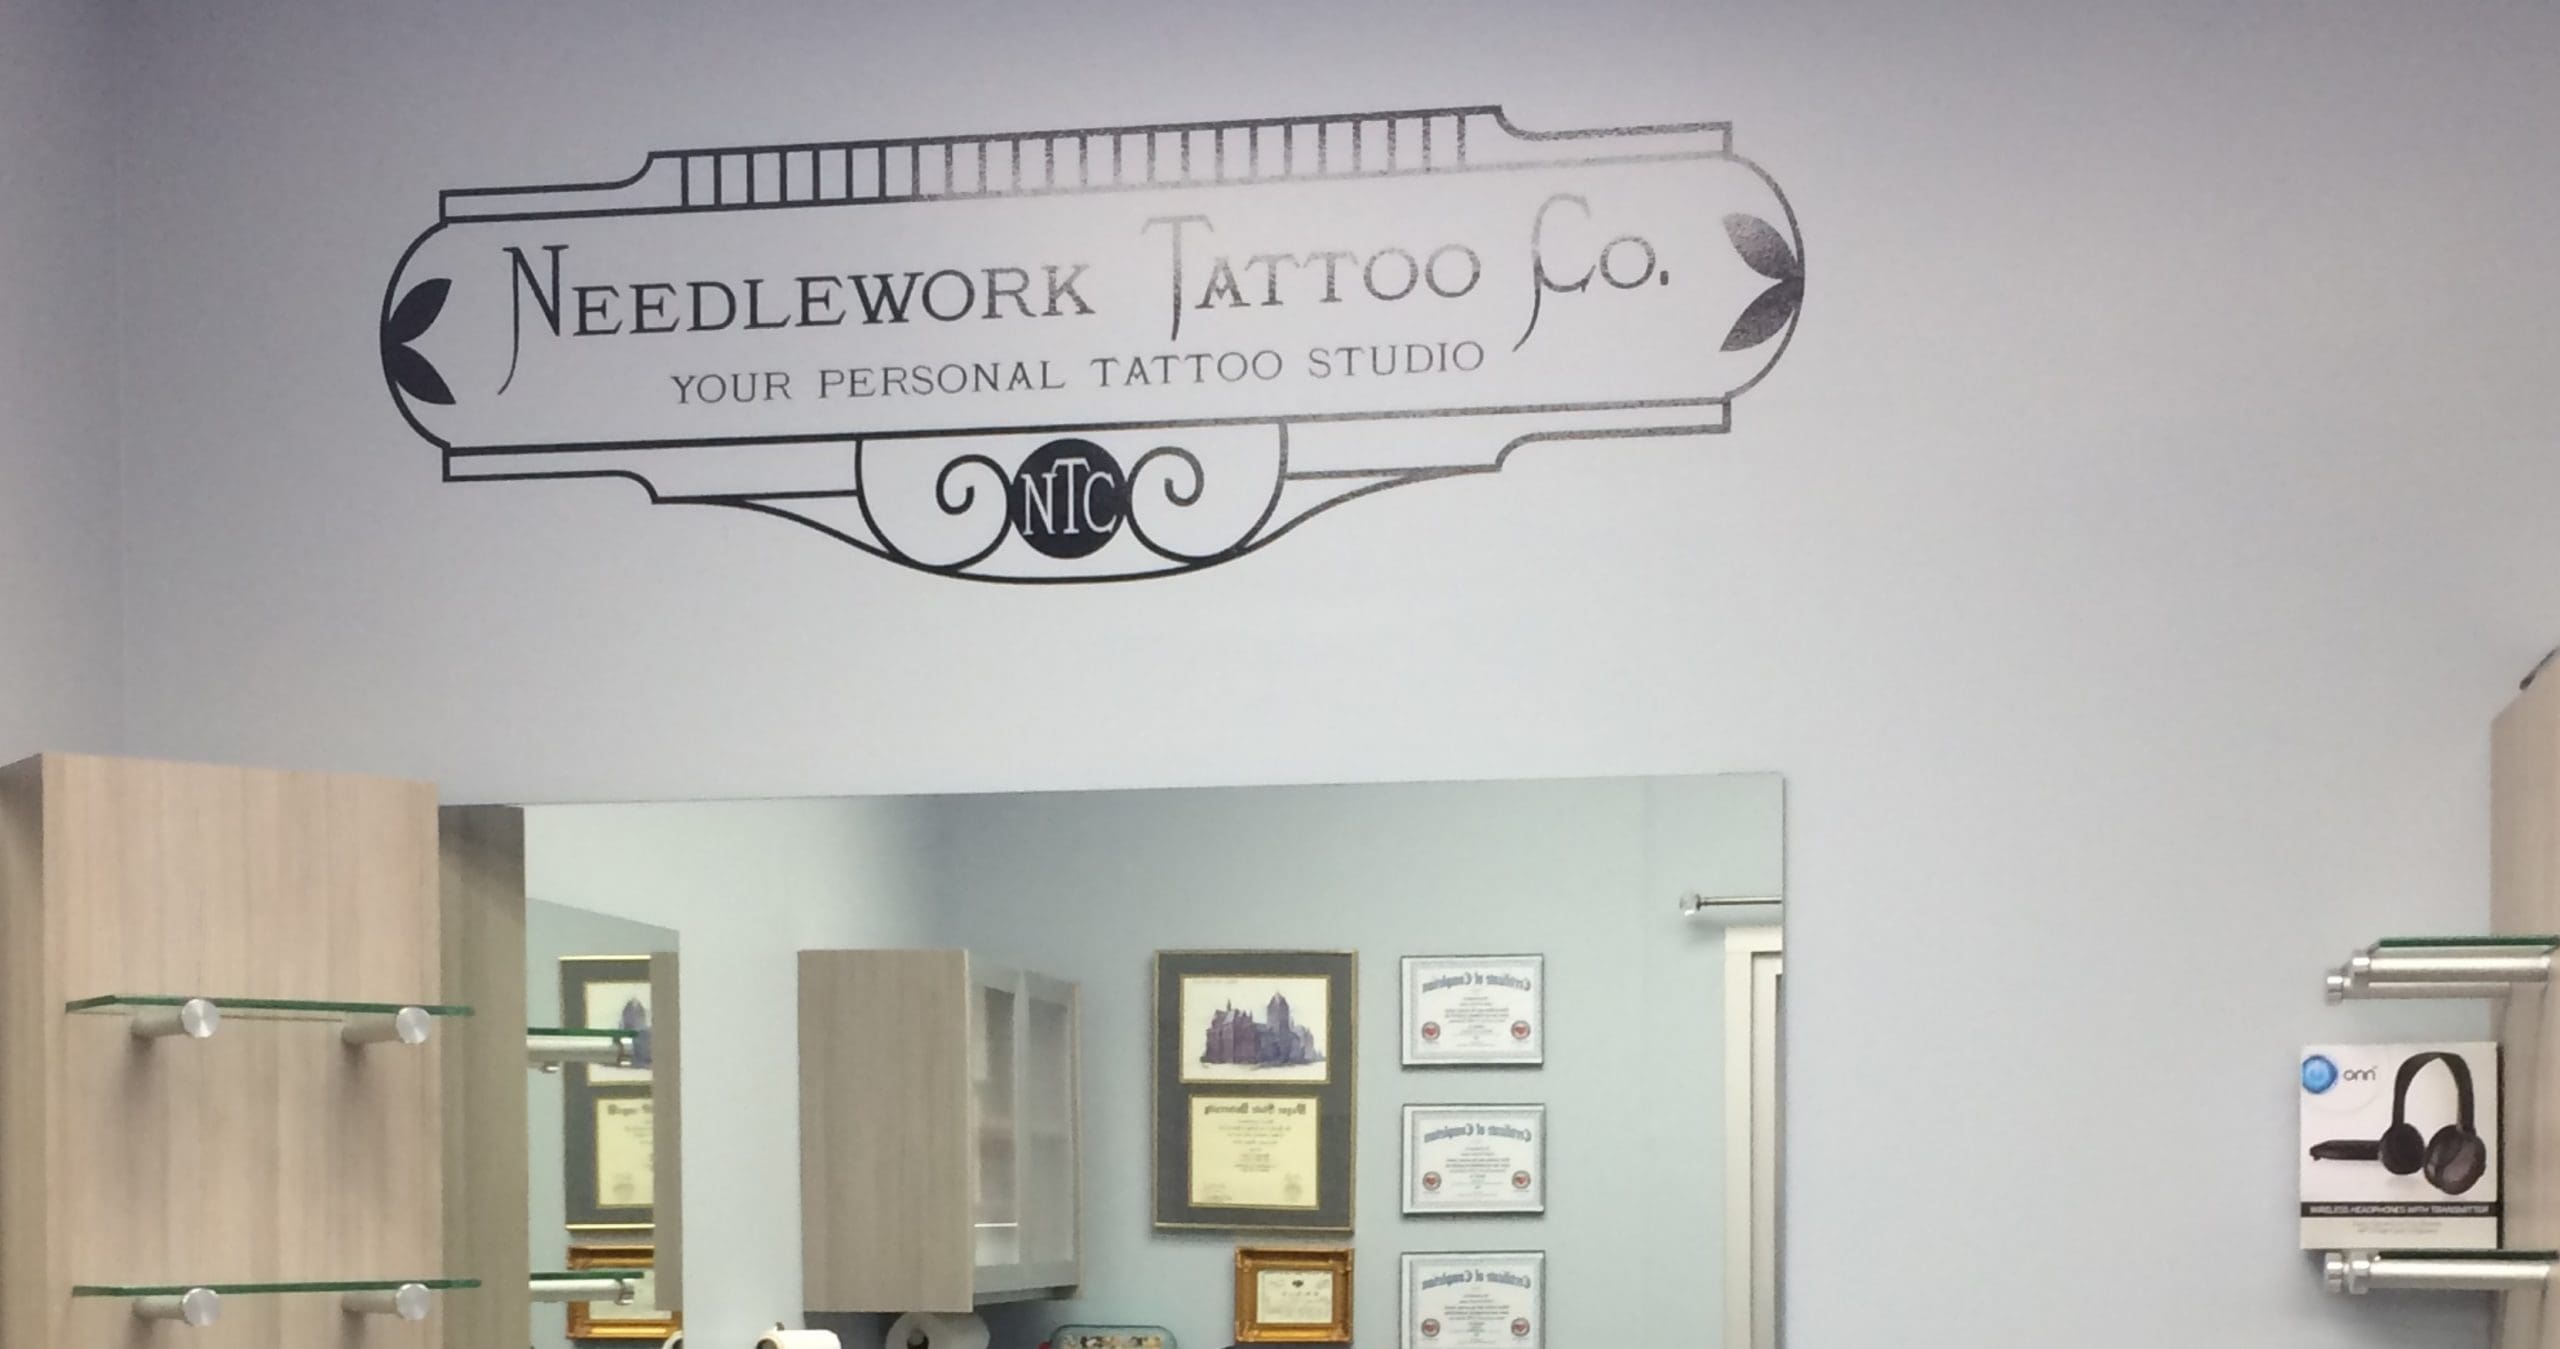 Needlework Tattoo - Wall Graphics - 02